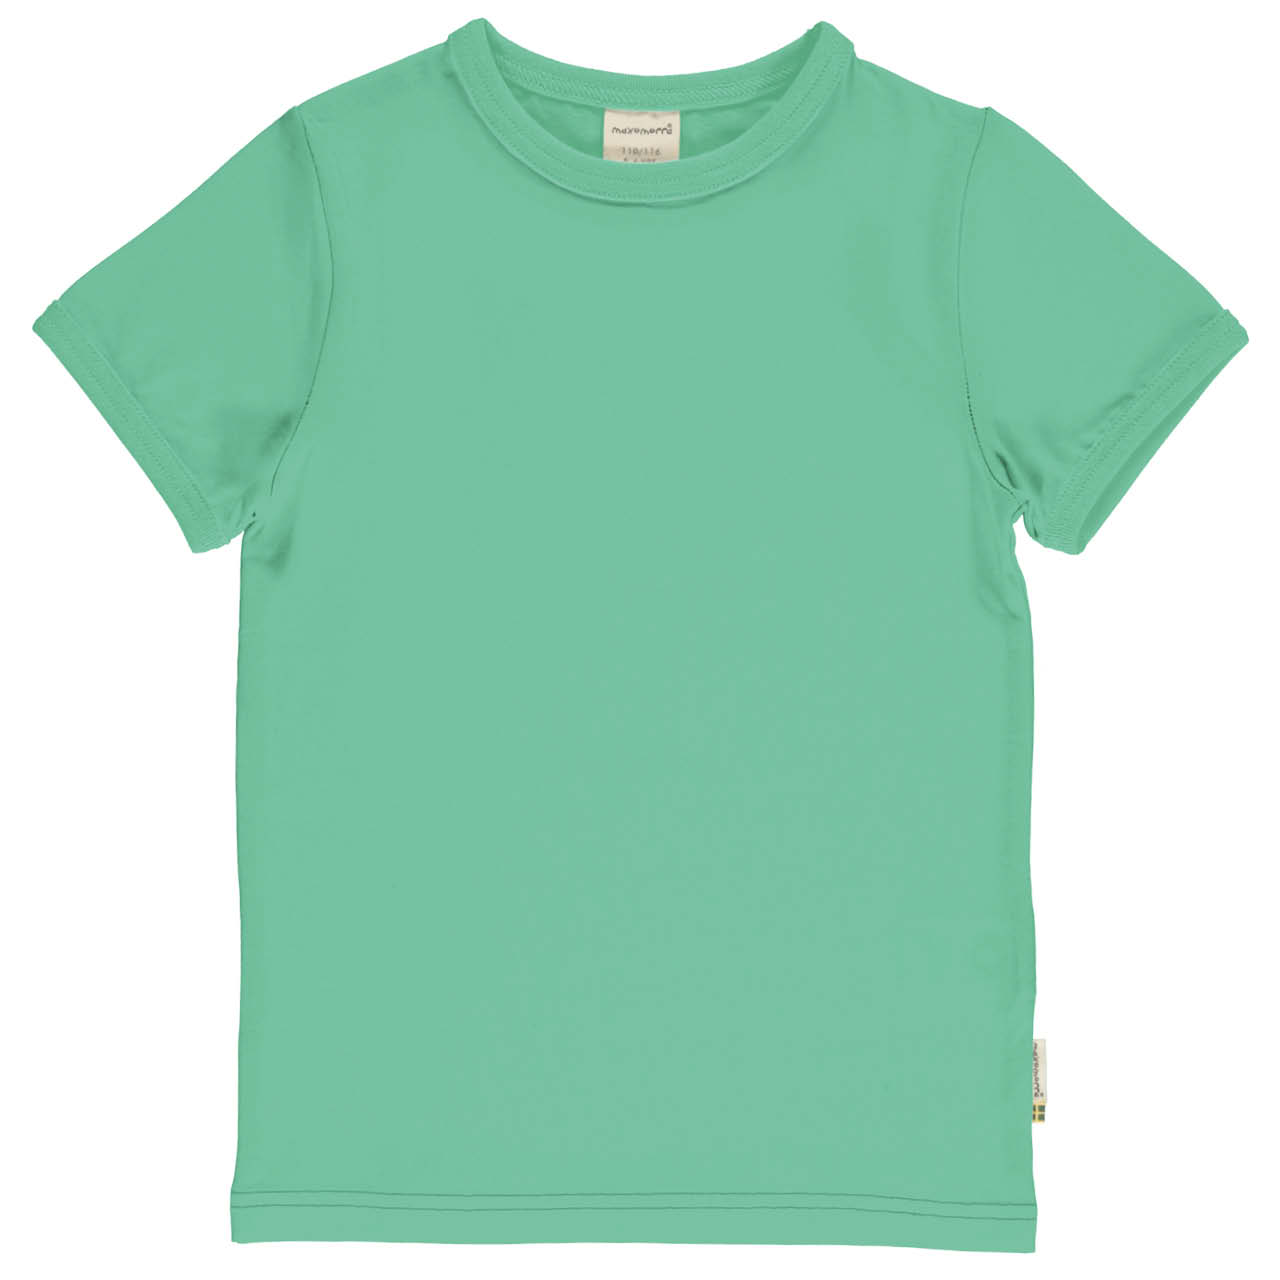 Softes T-Shirt uni grün